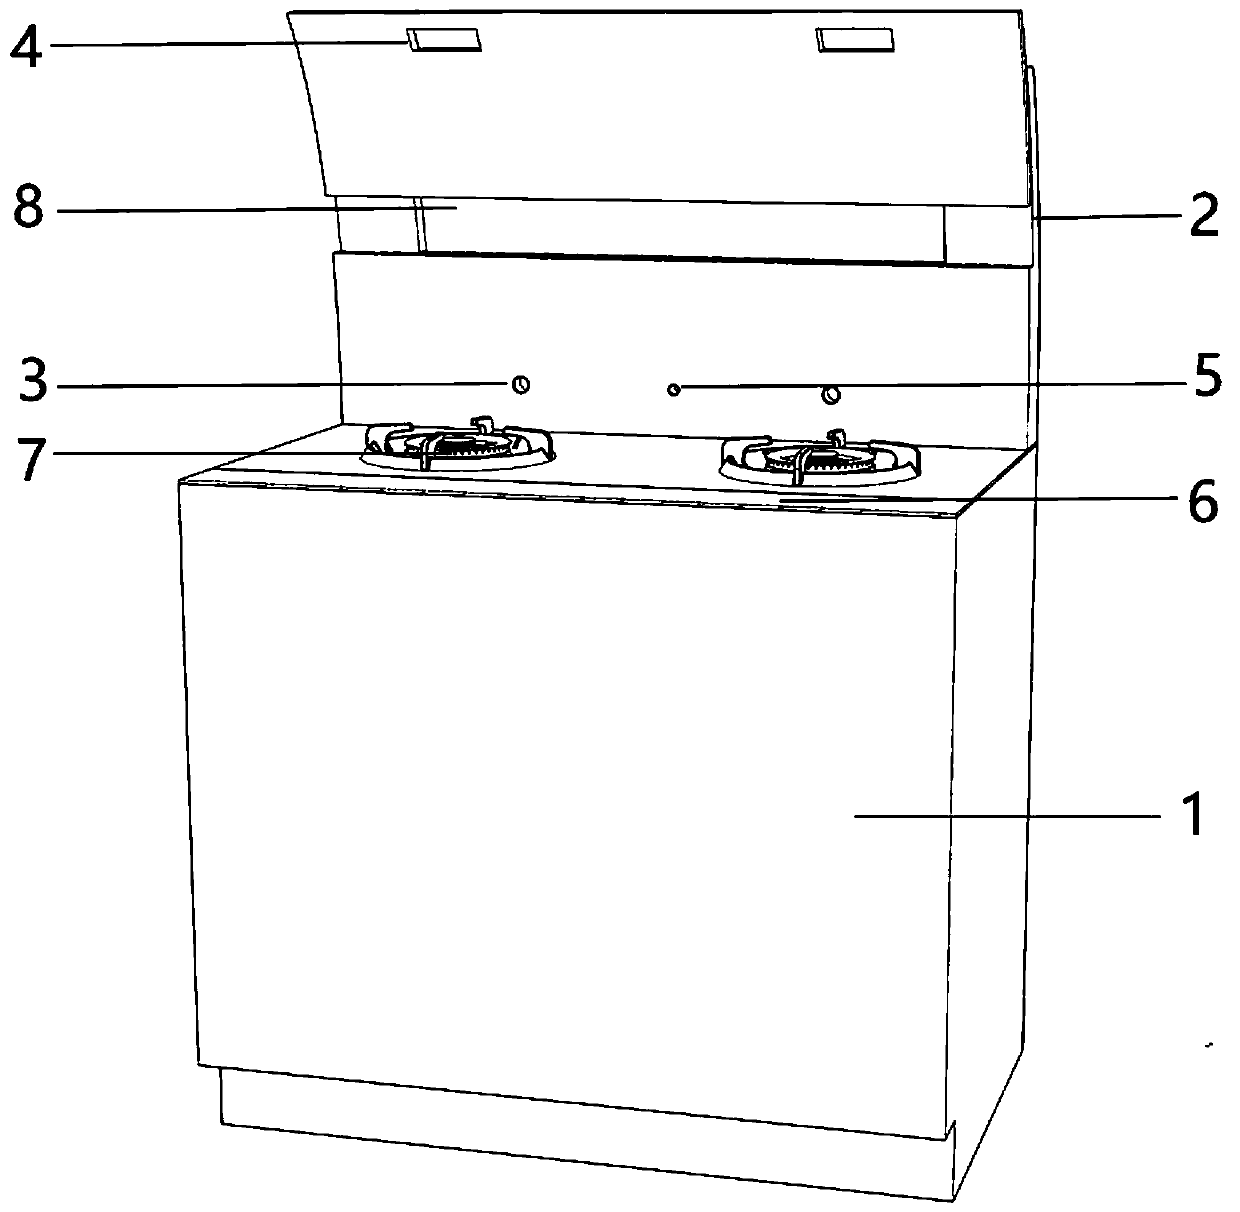 Integrated cooker capable of sensing pan and detecting pan temperature